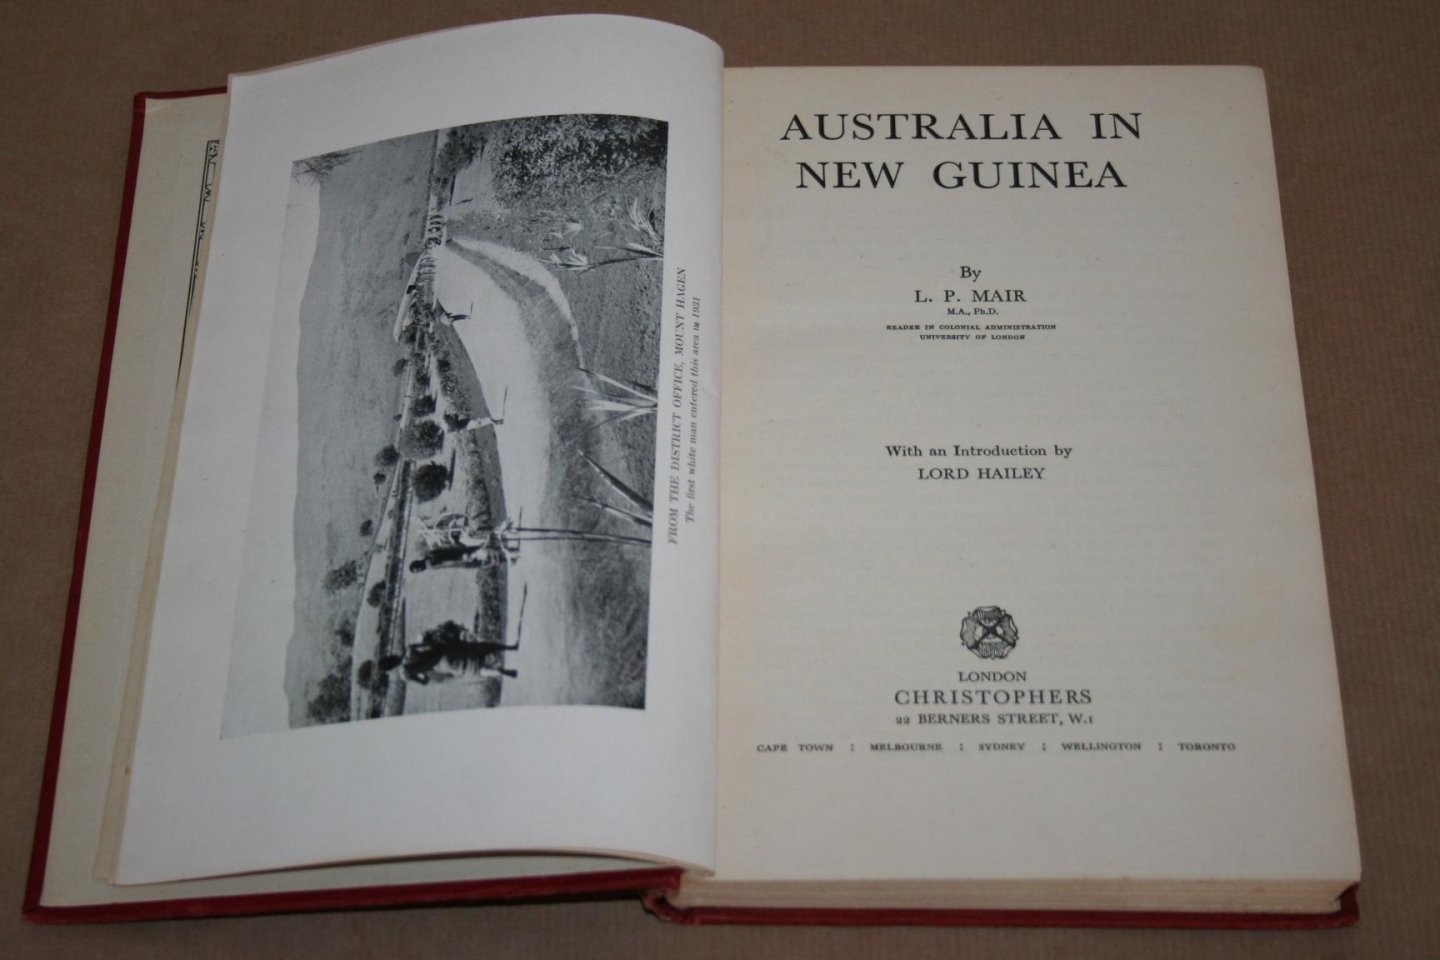 L.P. Mair - Australia in New Guinea